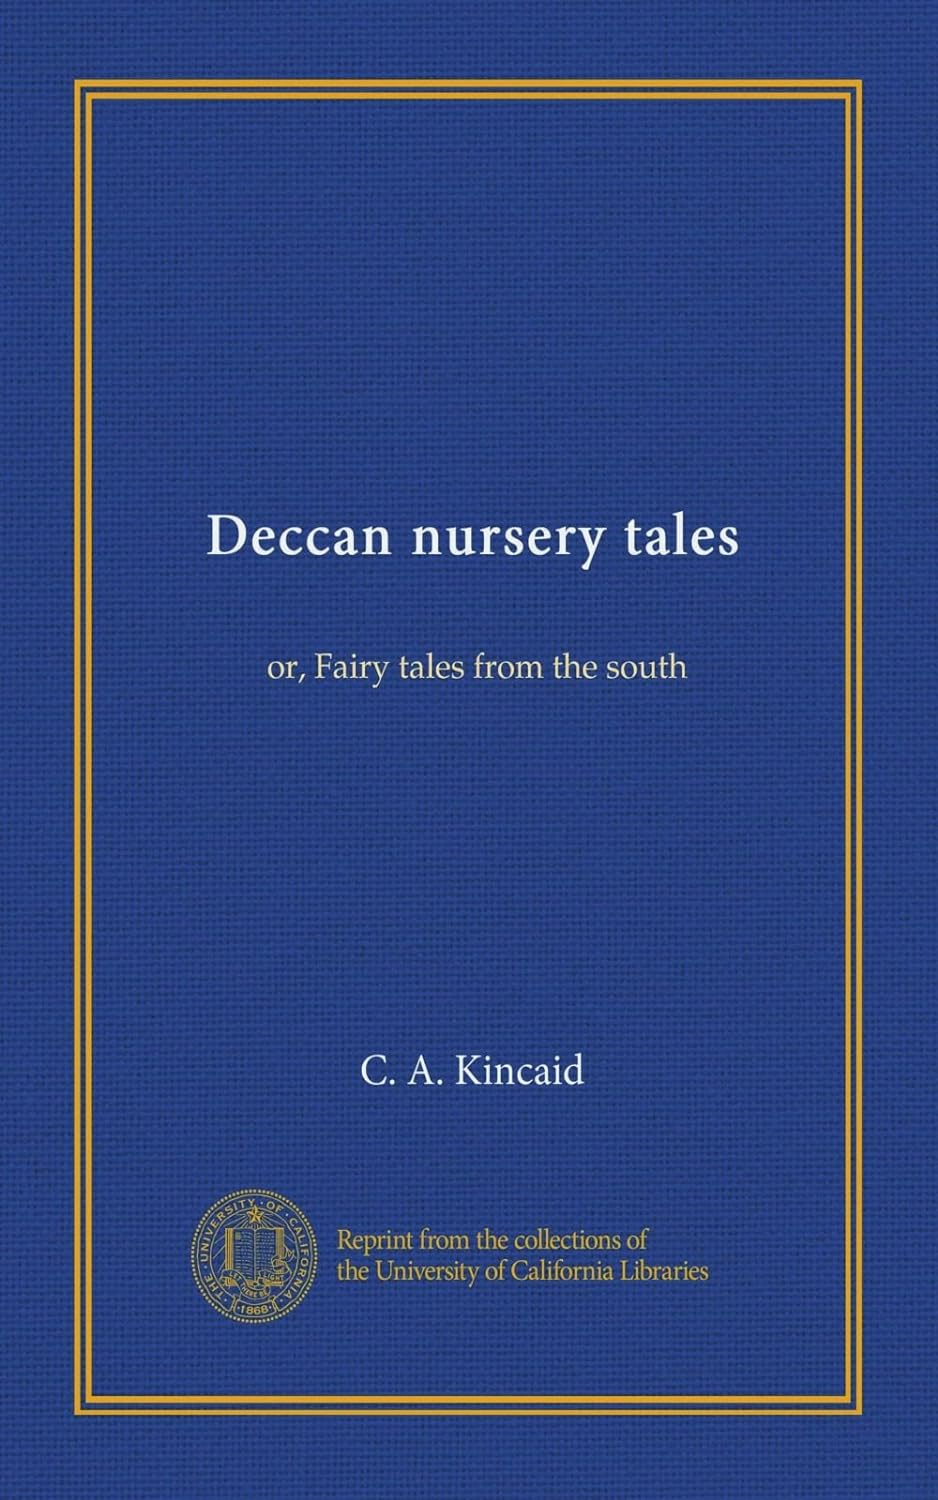 Deccan nursery tales